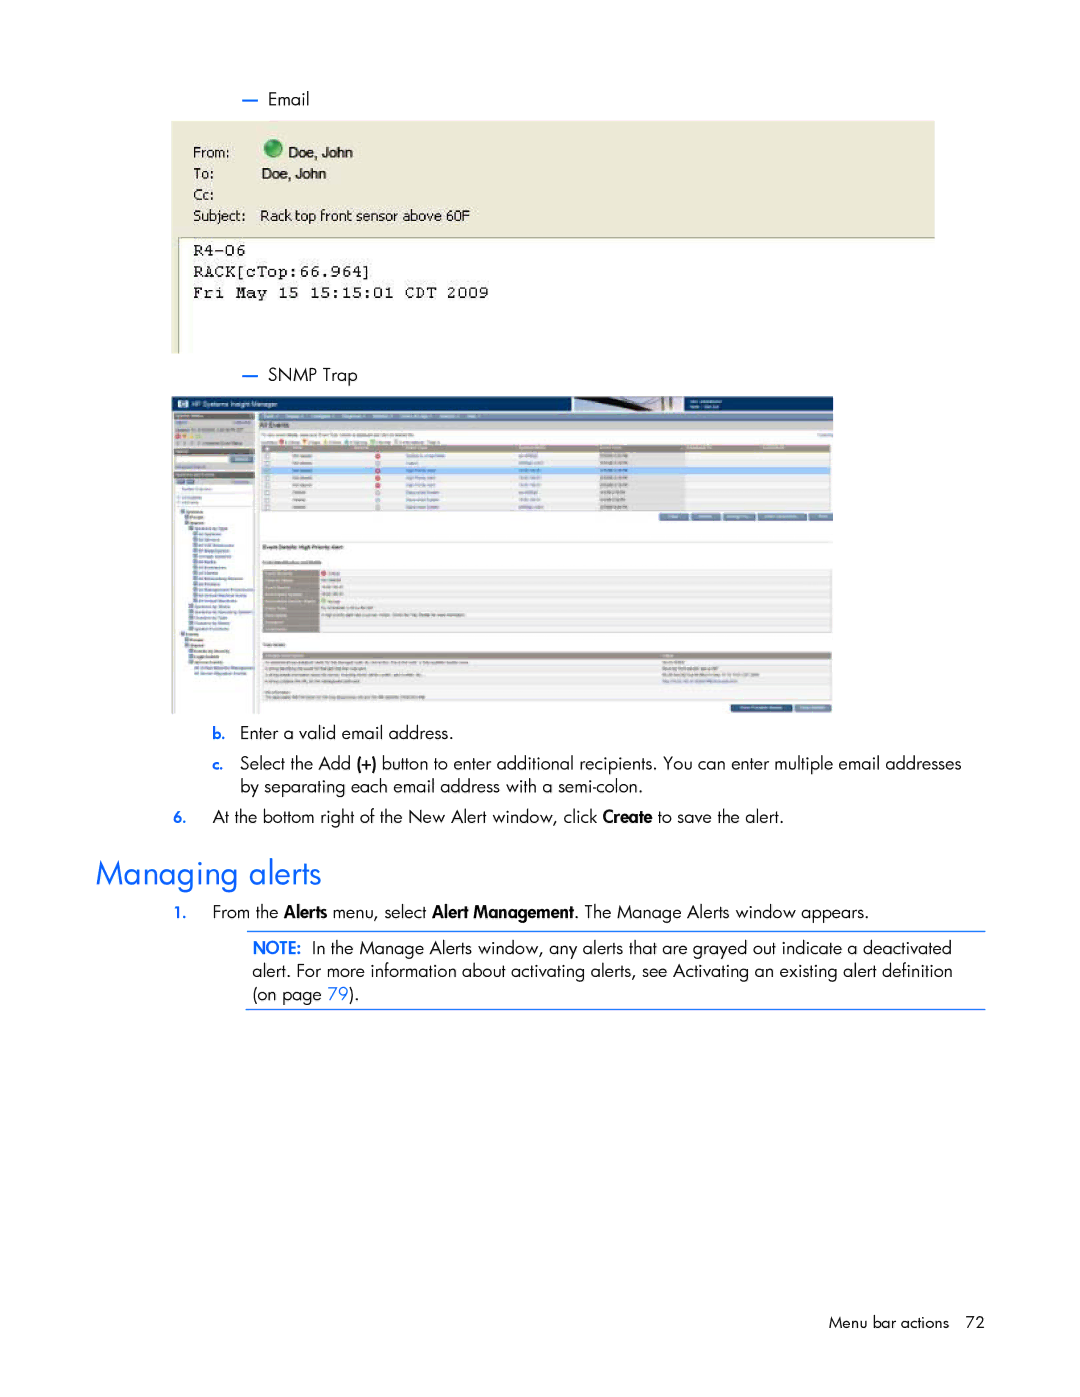 HP Data Center EnvIronmental Edge manual Managing alerts 